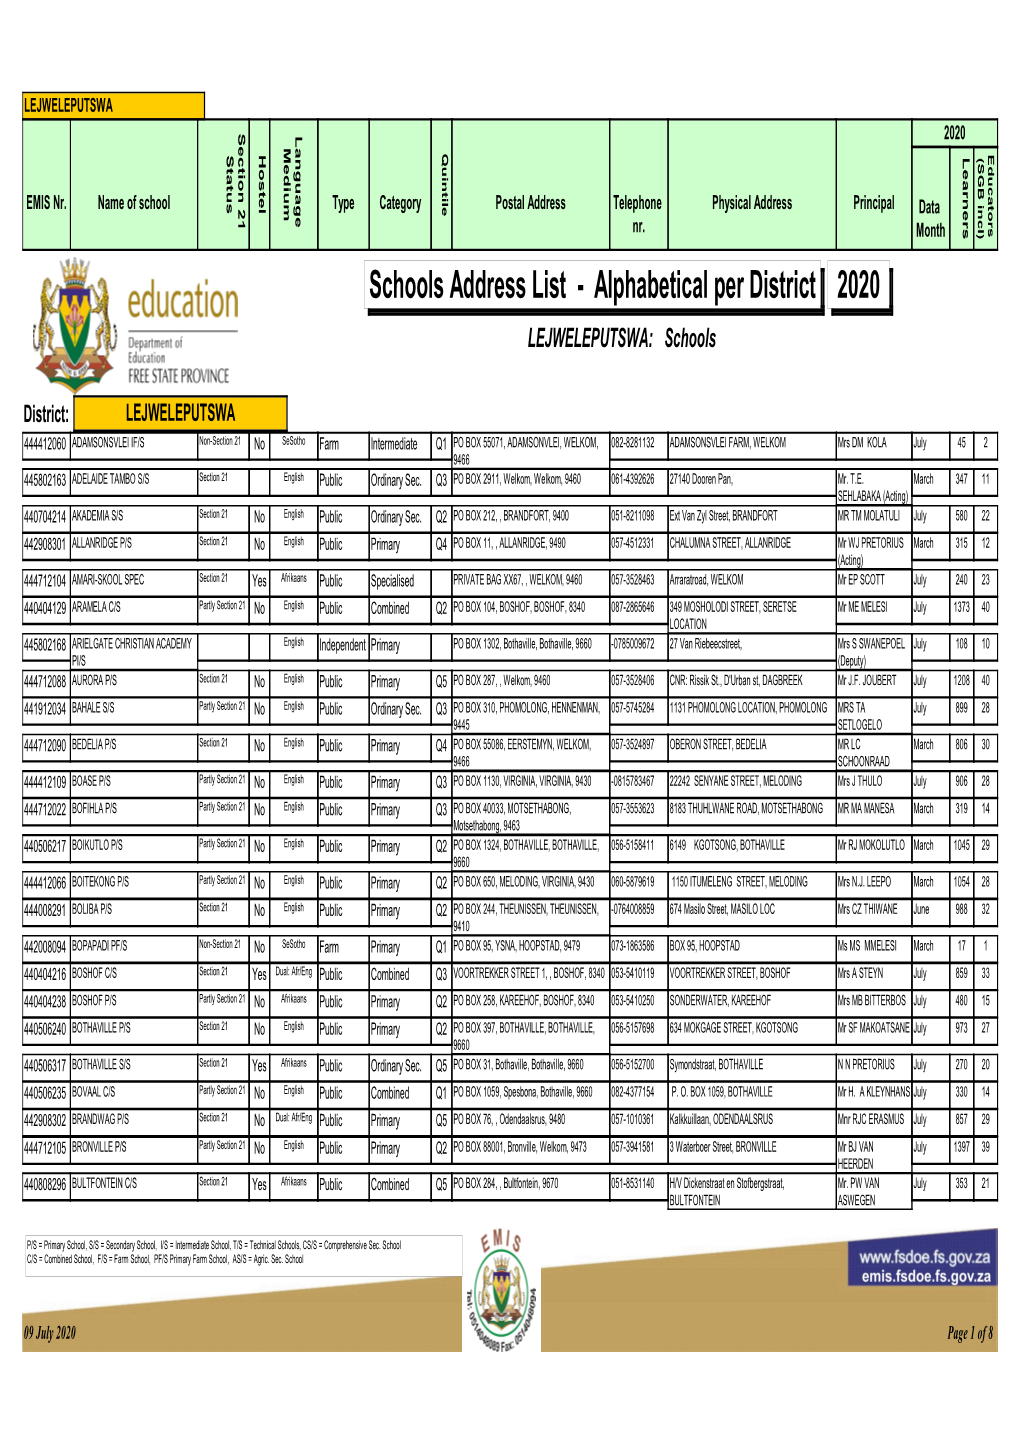 Schools Address List - Alphabetical Per District 2020 LEJWELEPUTSWA: Schools